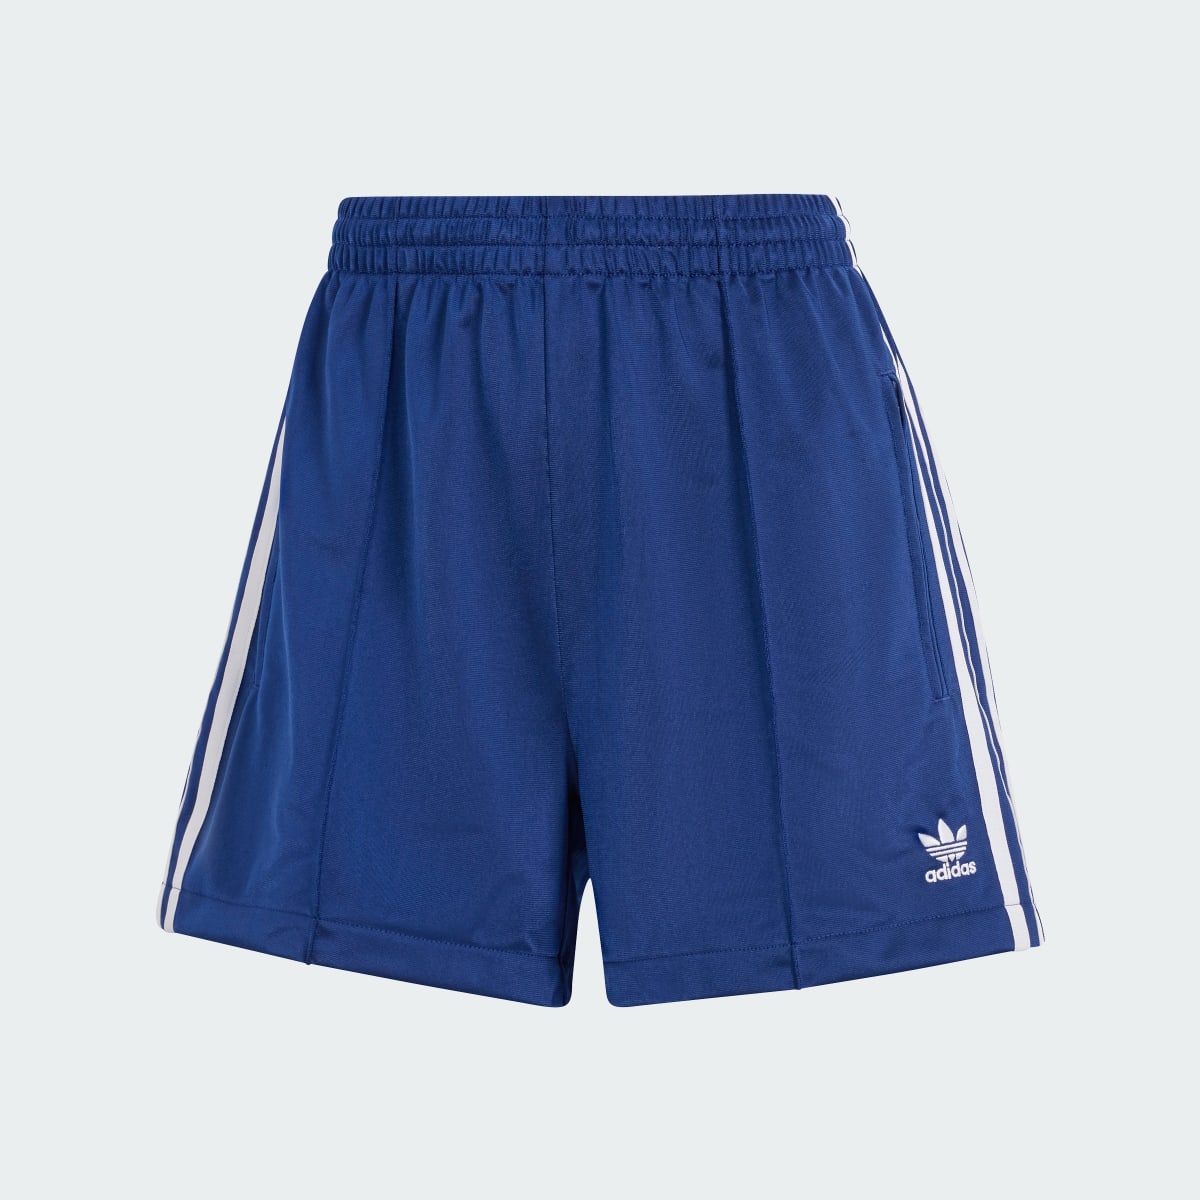 Adidas Firebird Shorts. 4